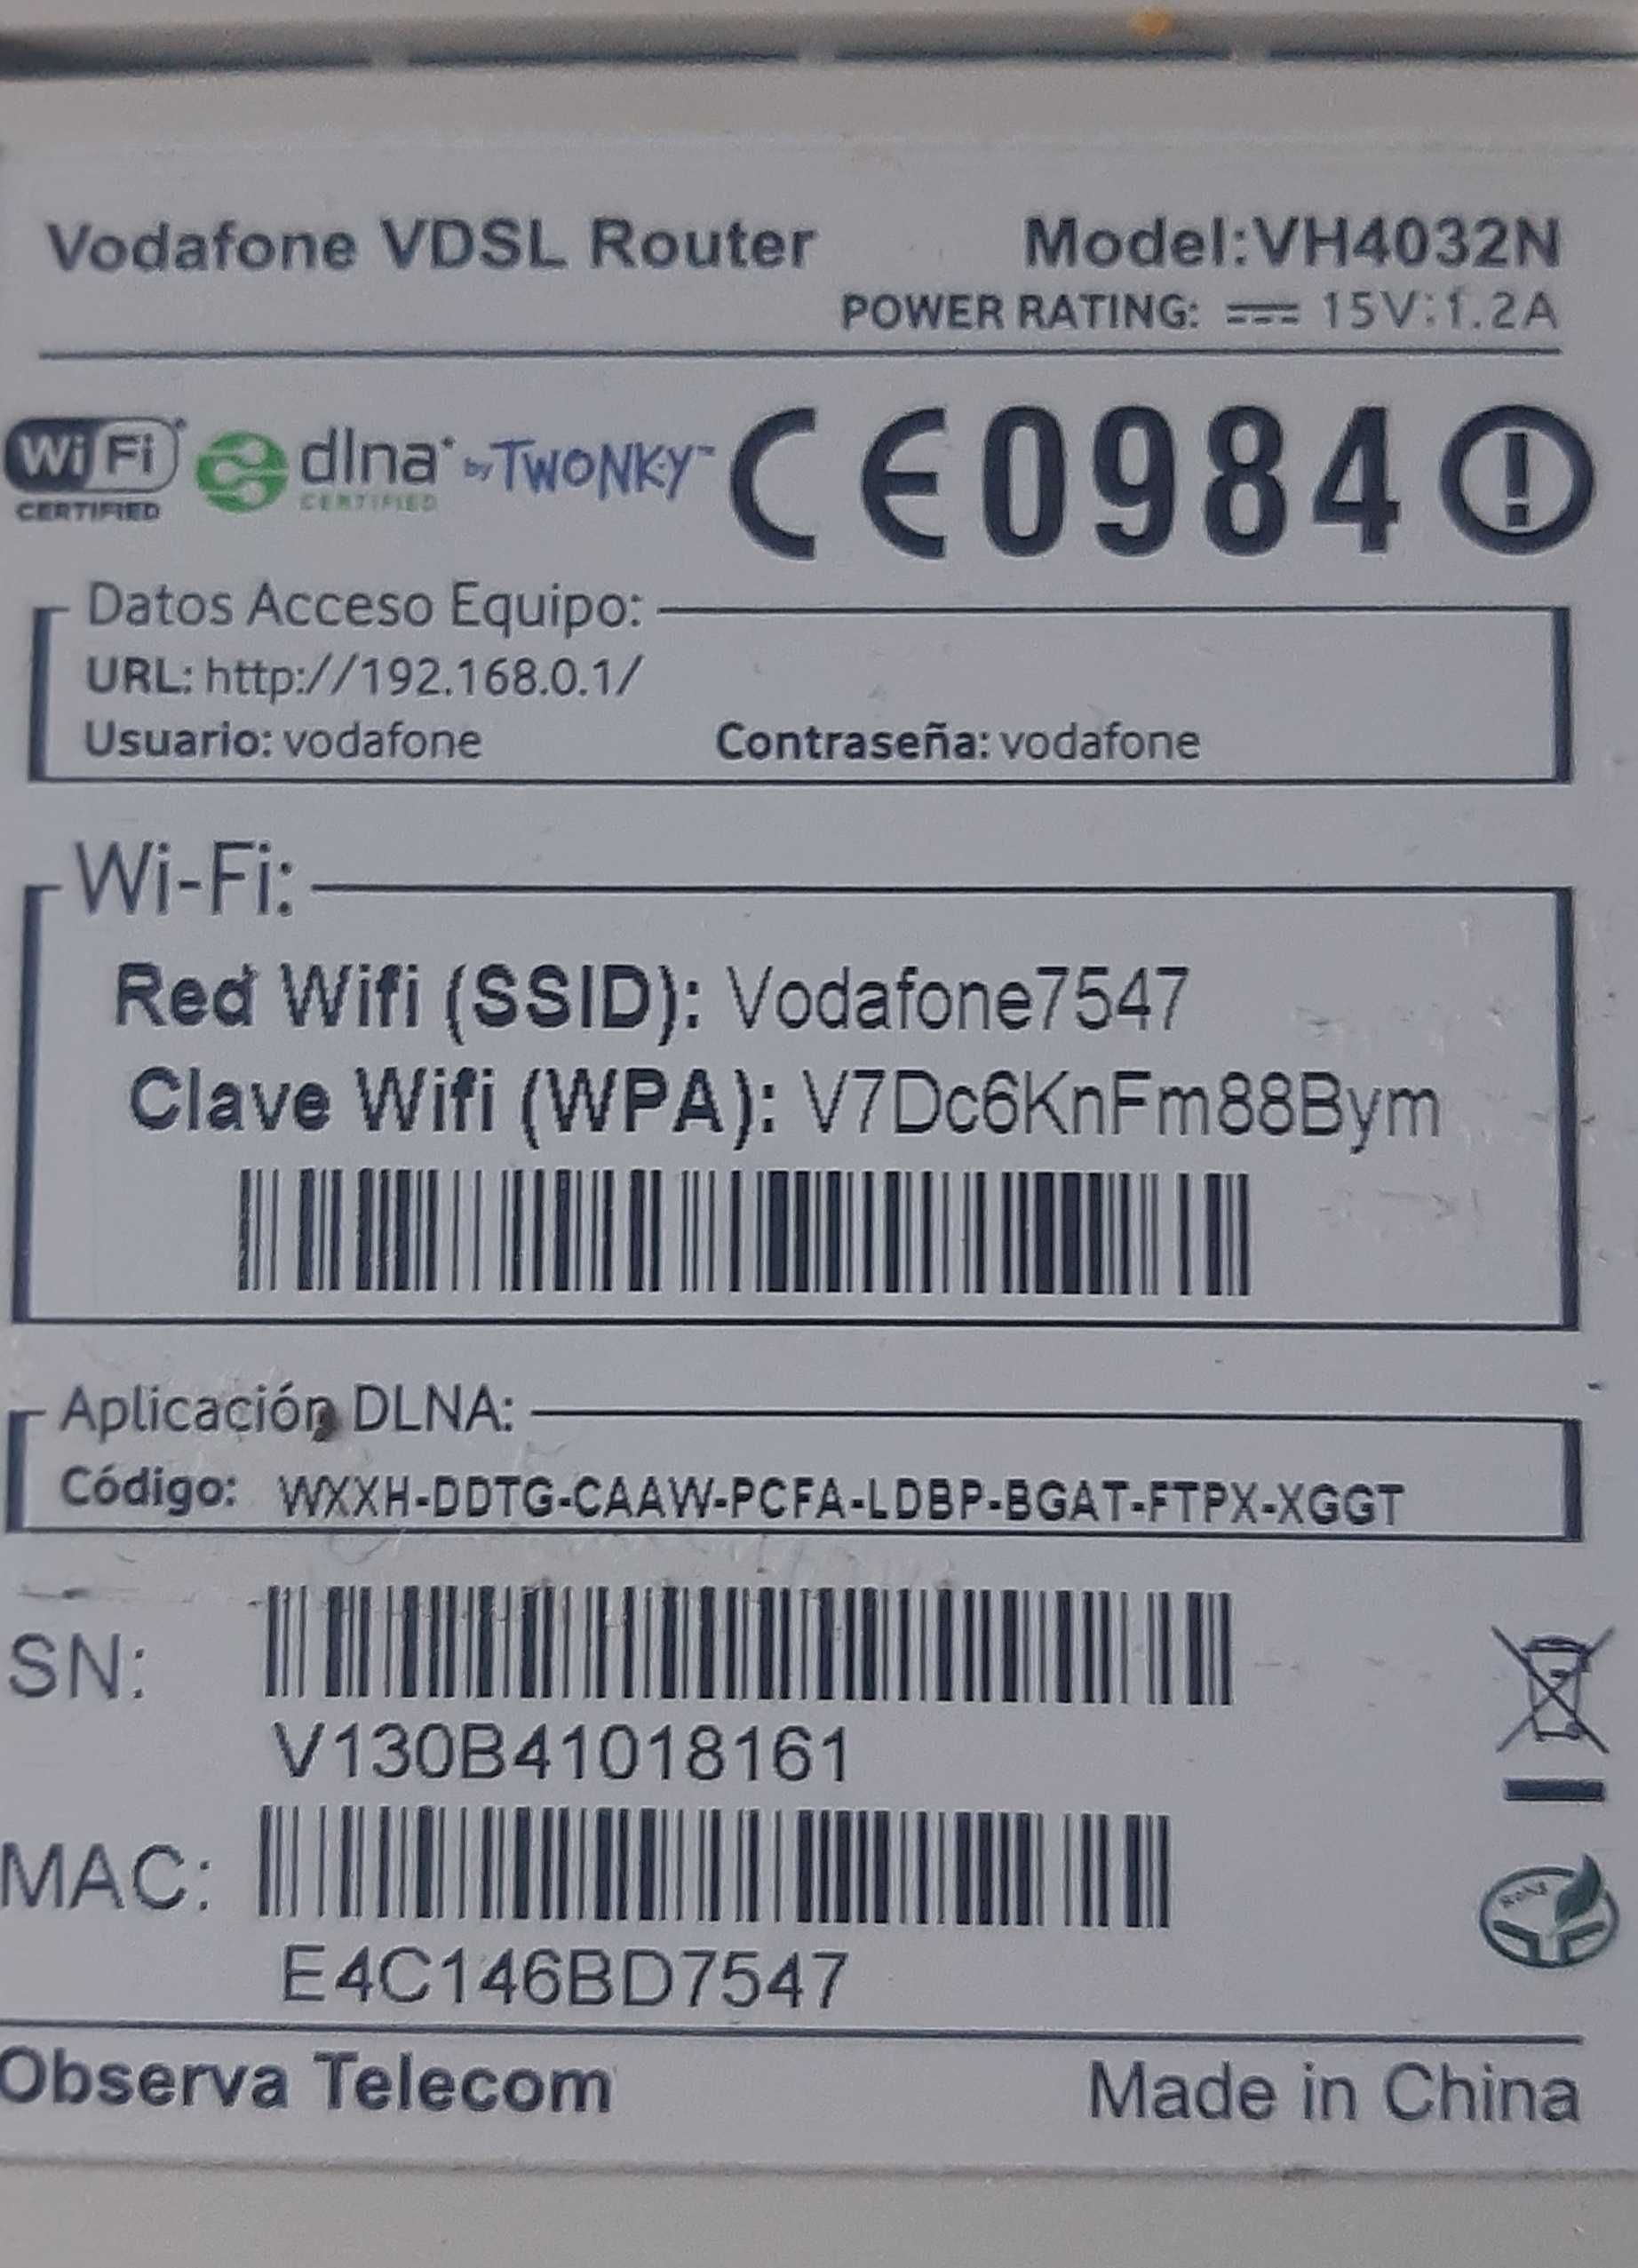 Vodafone VDSL Router VH4032N